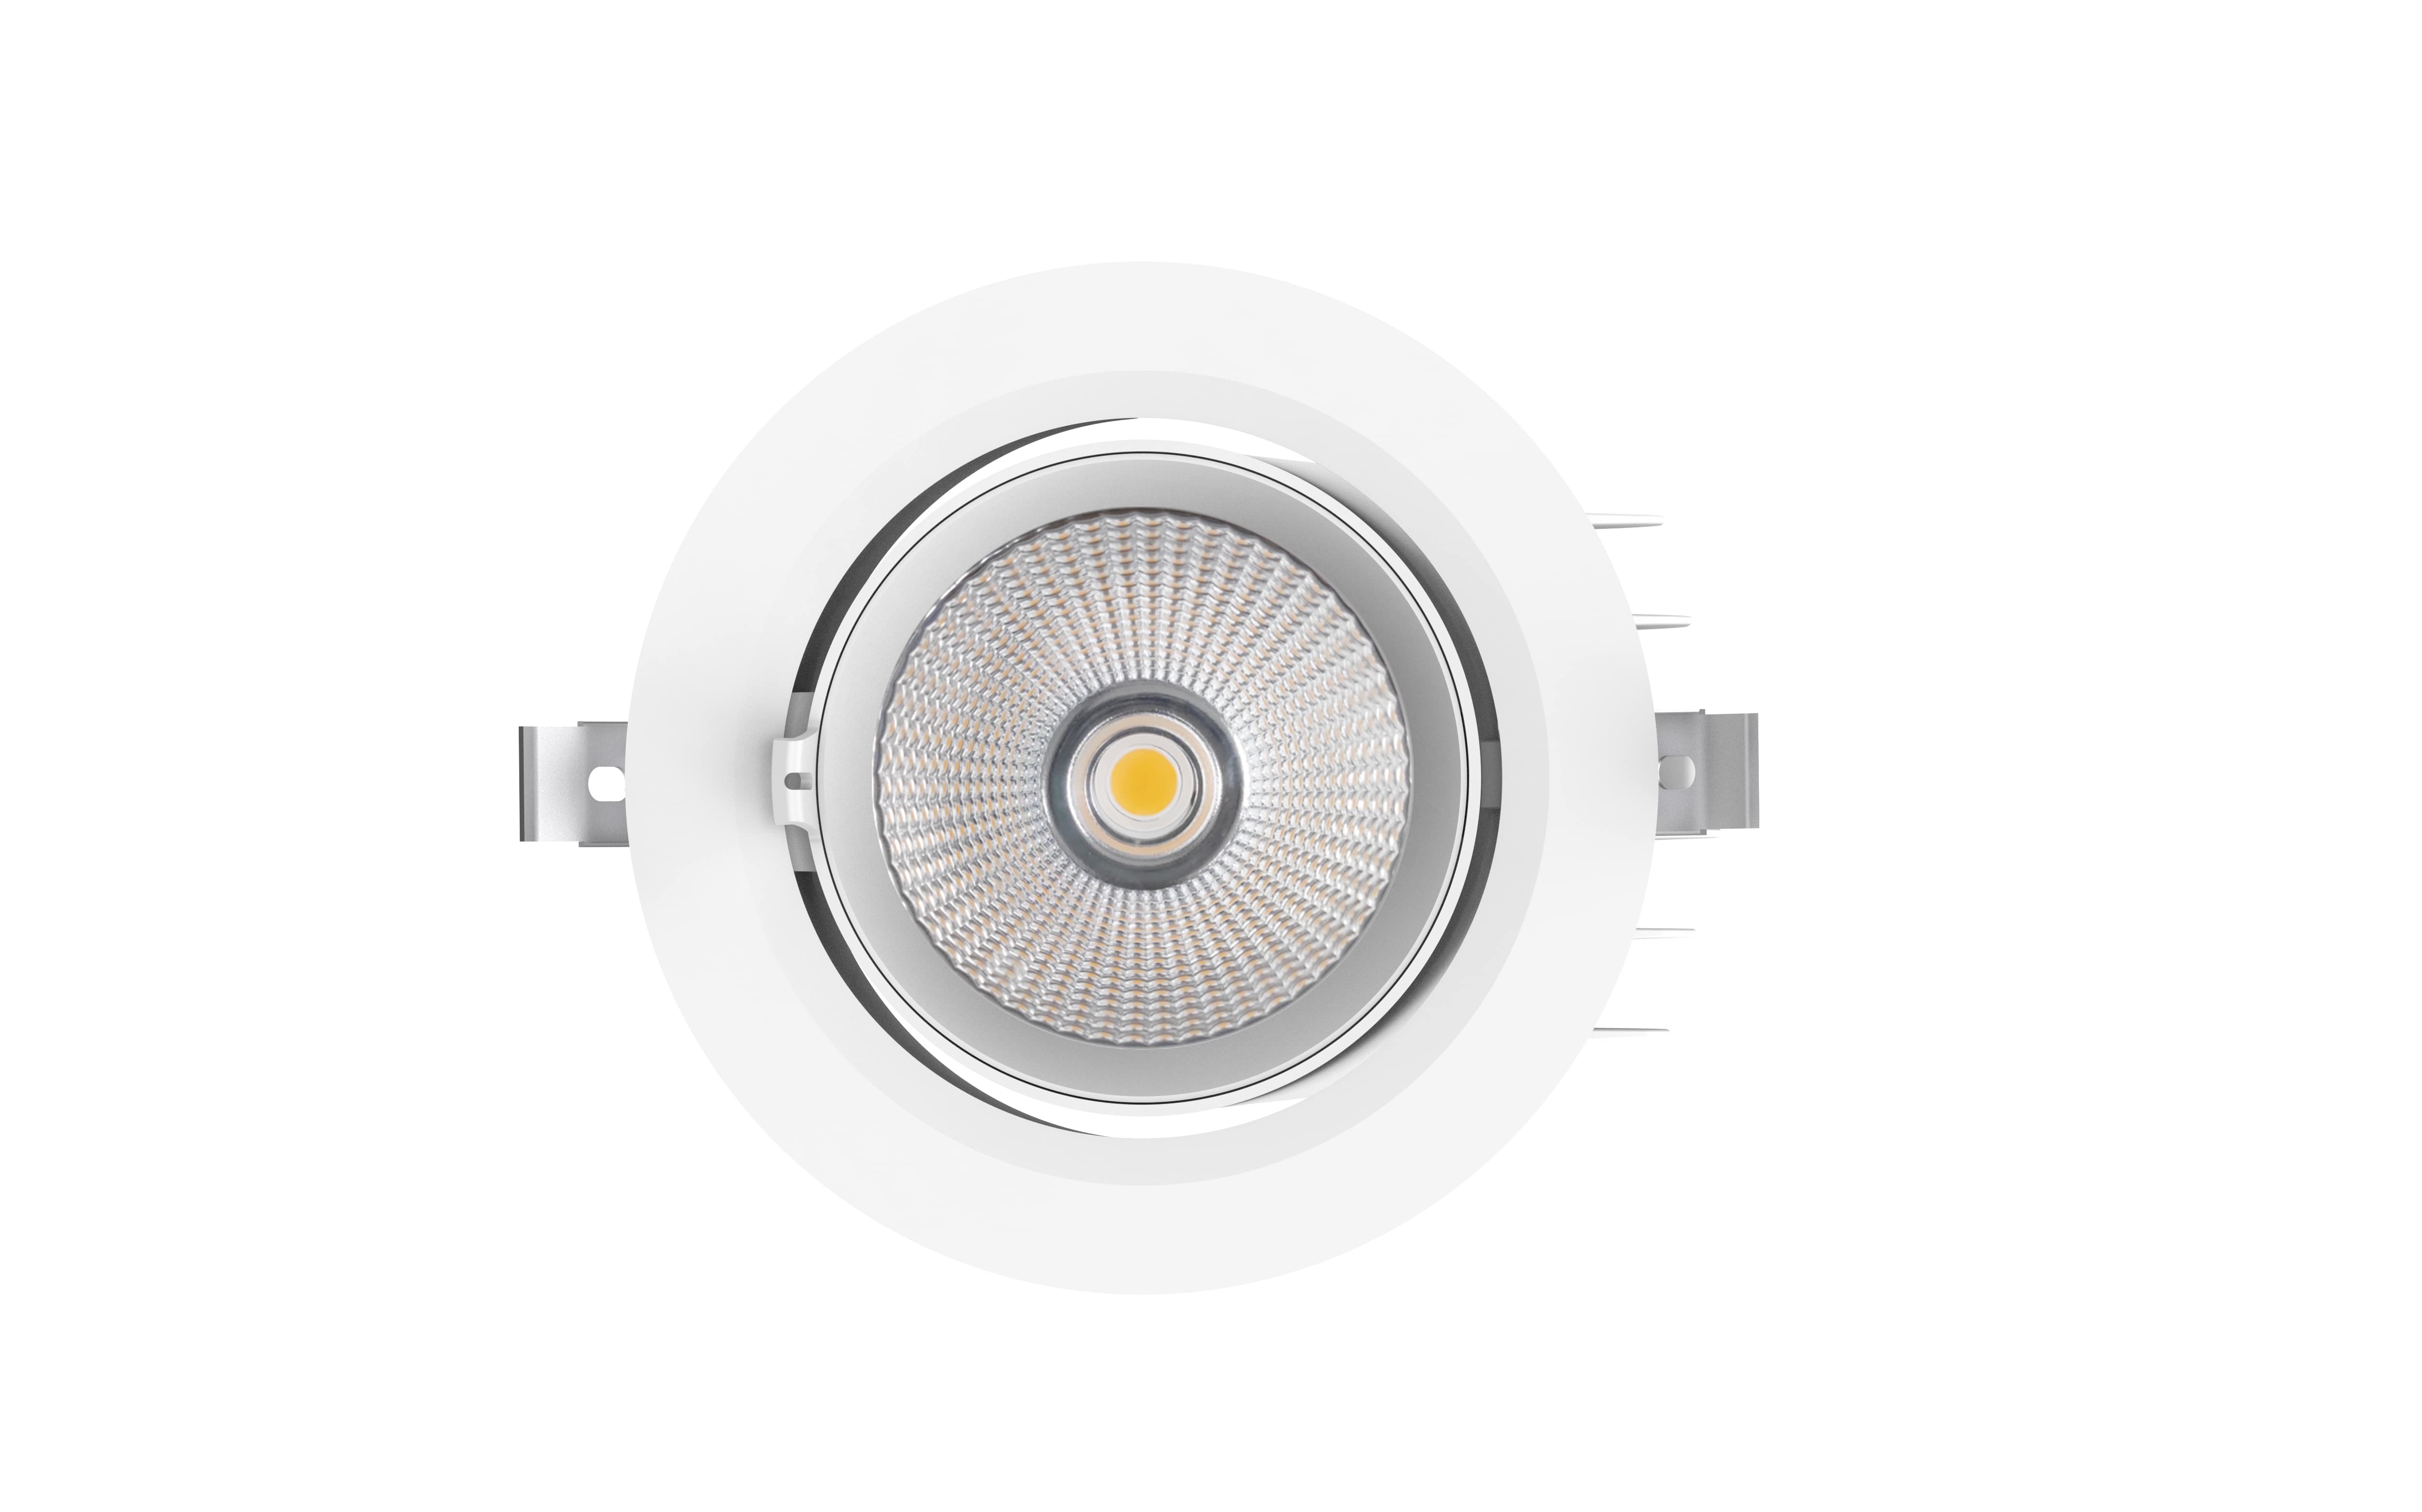 LED-Downlight MULTI 2 20-40 W, 840, 4.800 lm, 36°, PowerSwitch, 235x144 mm, Loch 200-210 mm